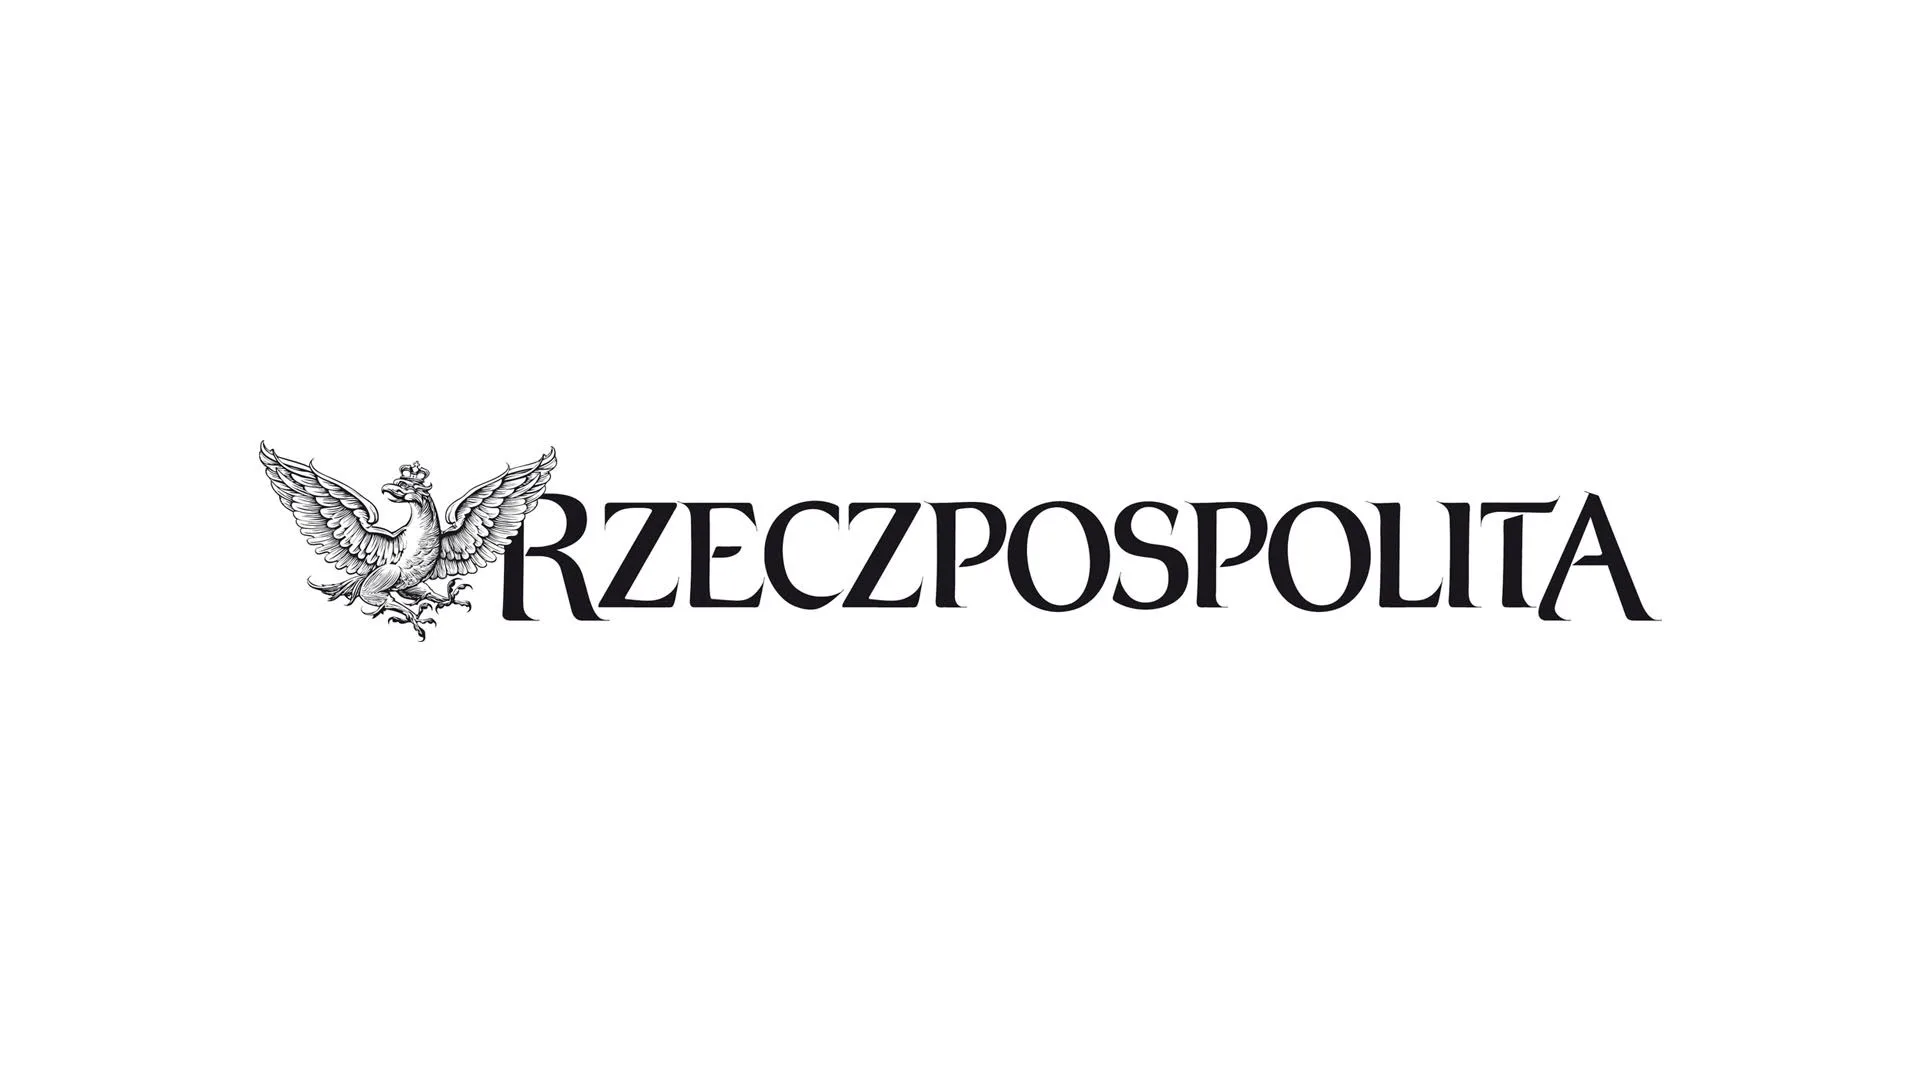 Rzeczpospolita, a prestigious Polish economic daily